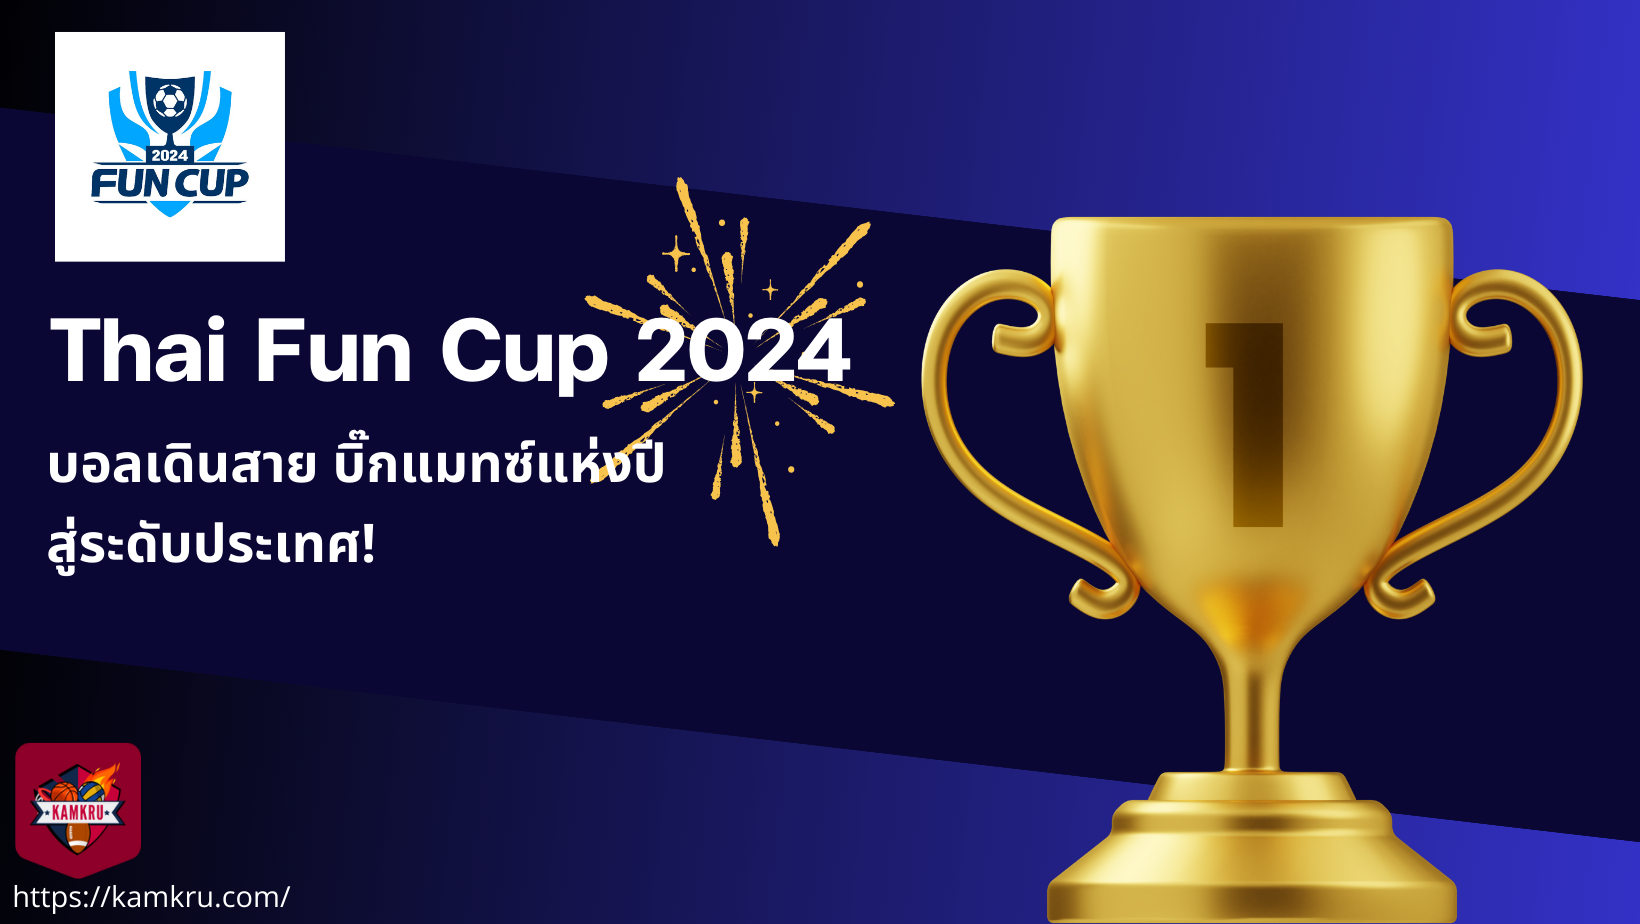 Fun Cup 2024 — บอลเดินสาย บิ๊กแมทซ์แห่งปี สู่ระดับประเทศ!